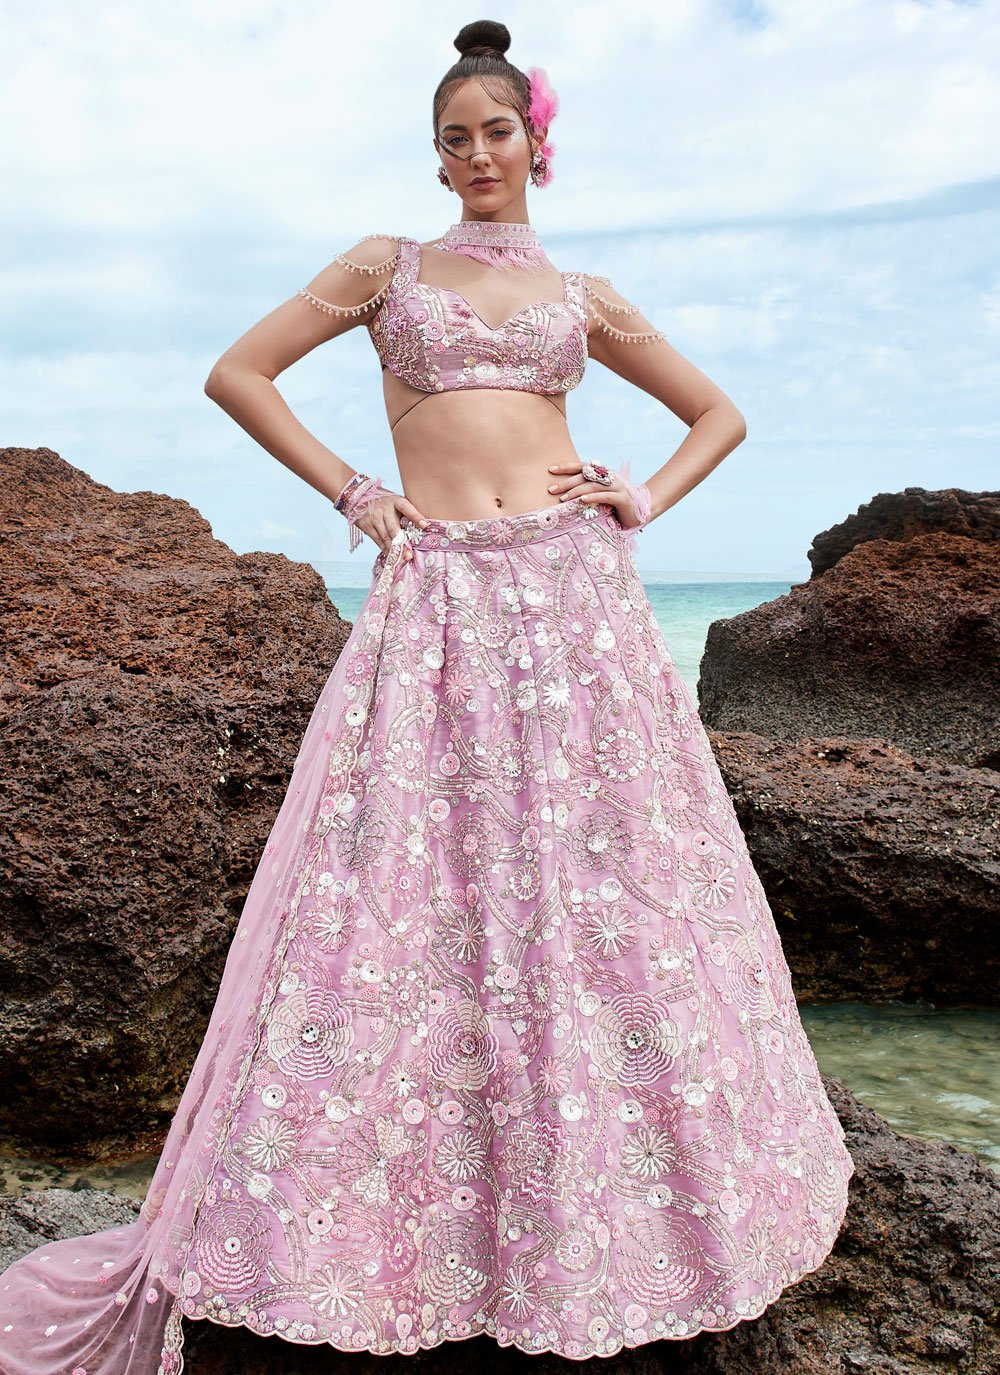 Designer Lehenga Choli For Bridal Beautiful Wedding Look Modern Style Net  Fabric | eBay